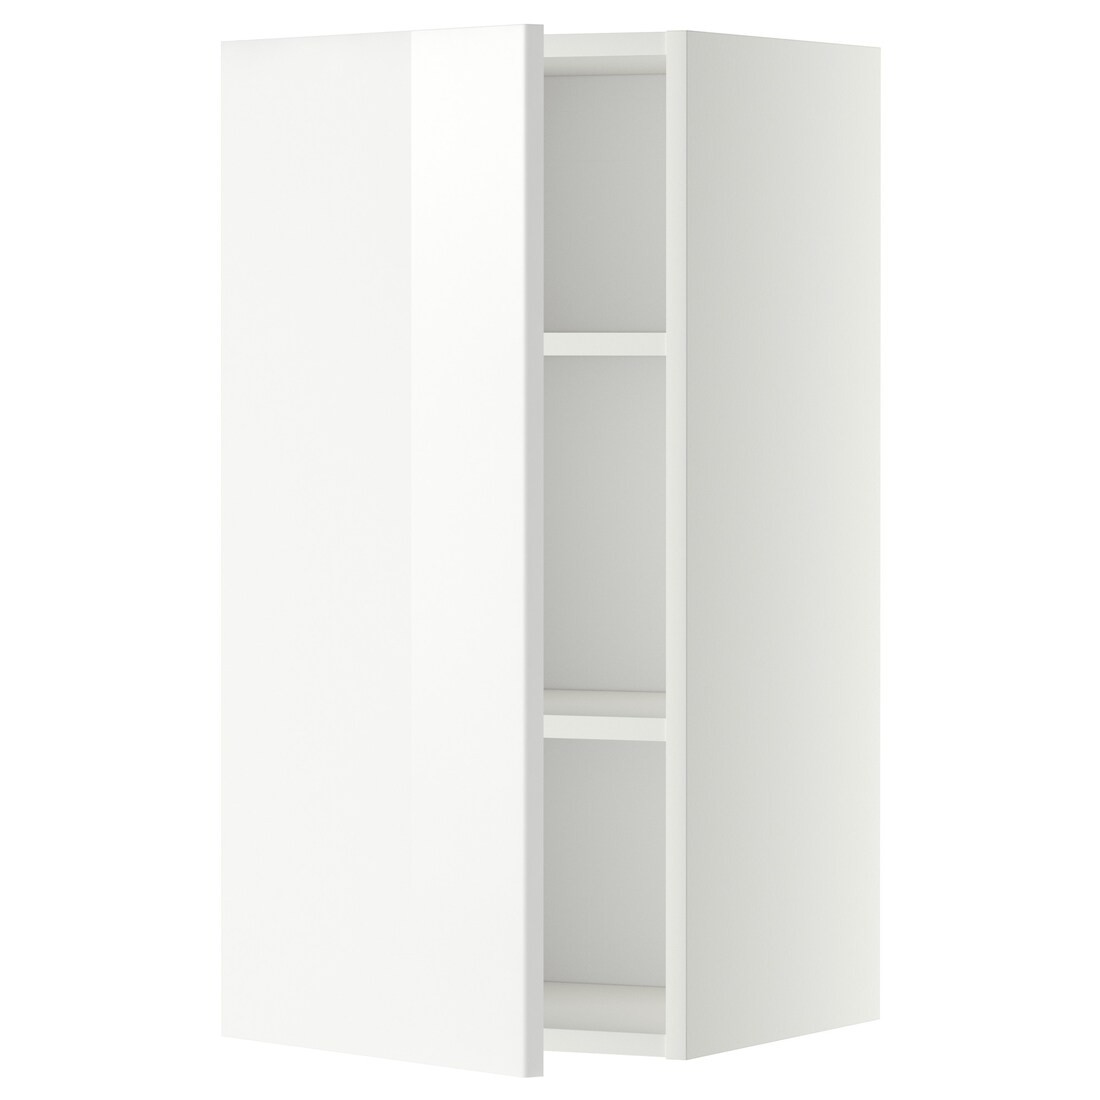 IKEA METOD МЕТОД Шкаф навесной с полками, белый / Ringhult белый, 40x80 см 29458395 294.583.95